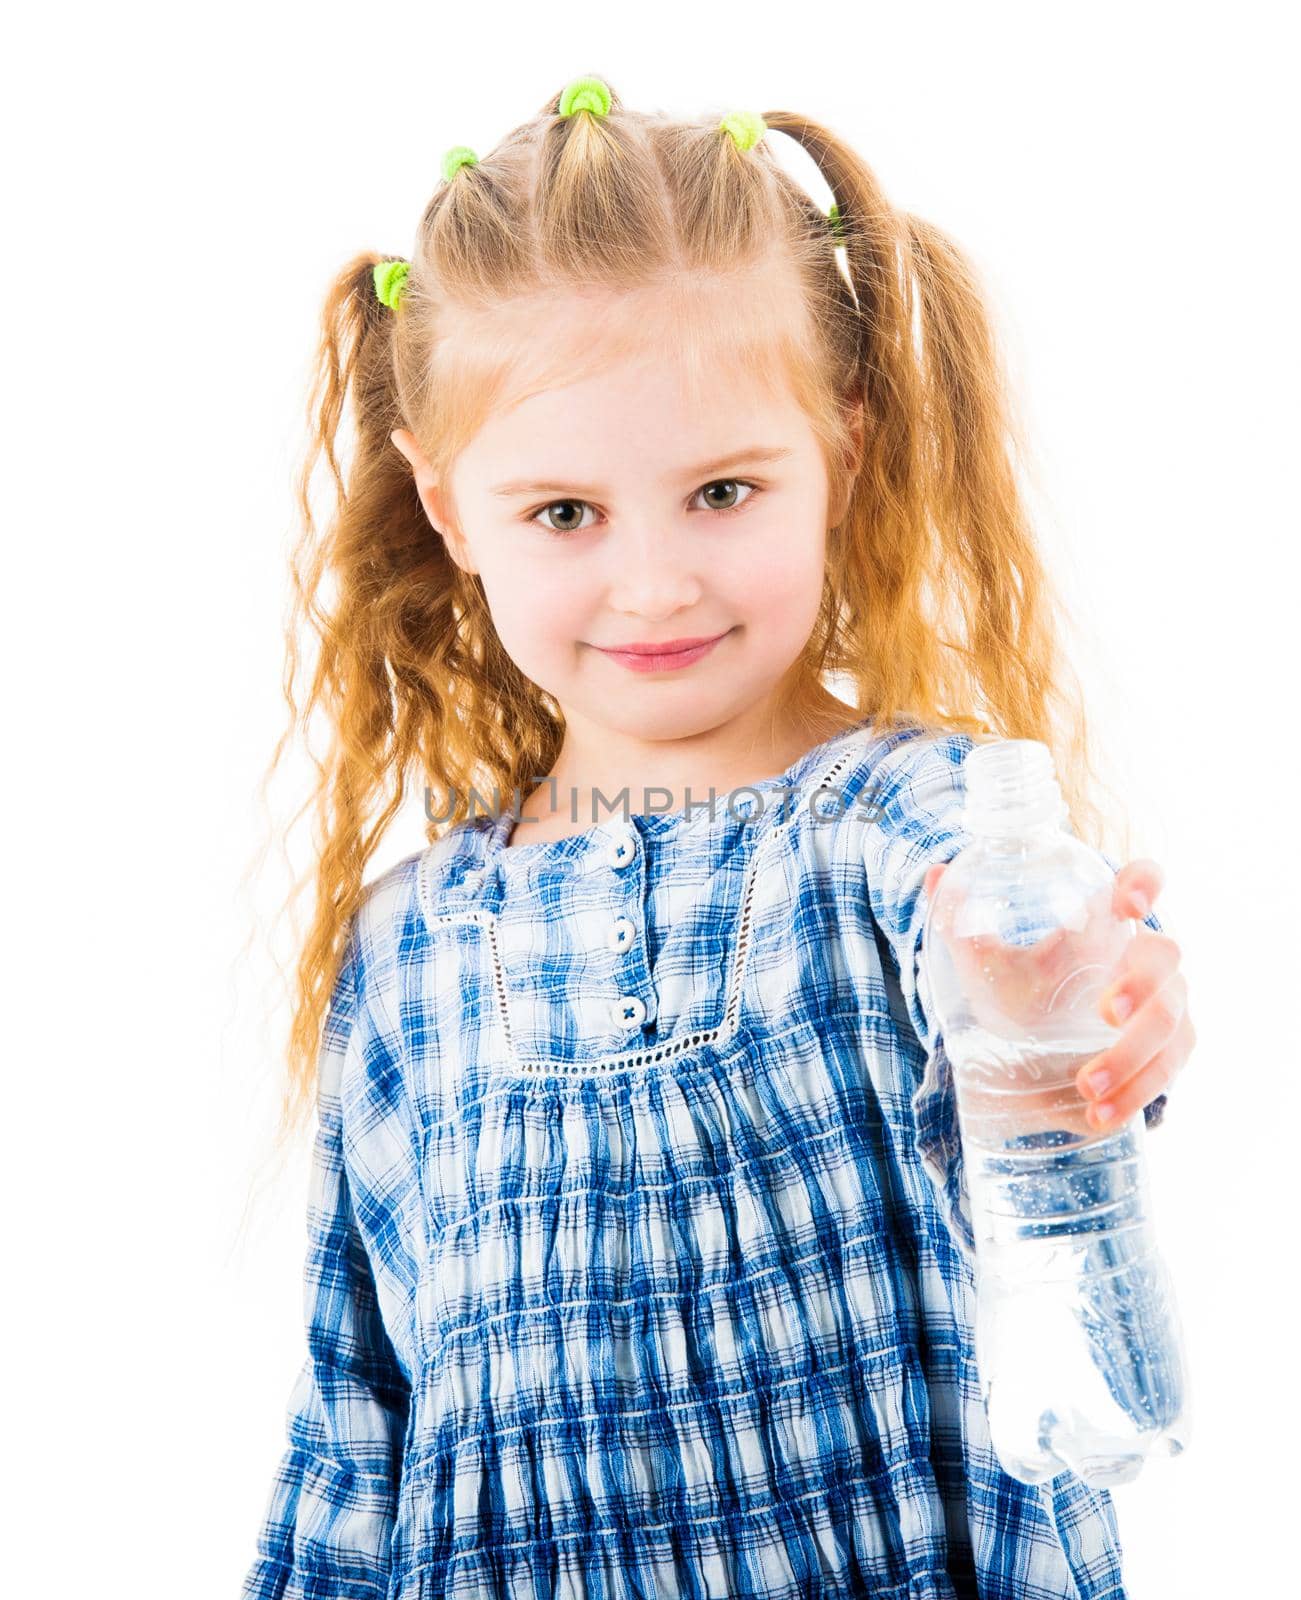 Child girl holding open bottle of water by GekaSkr